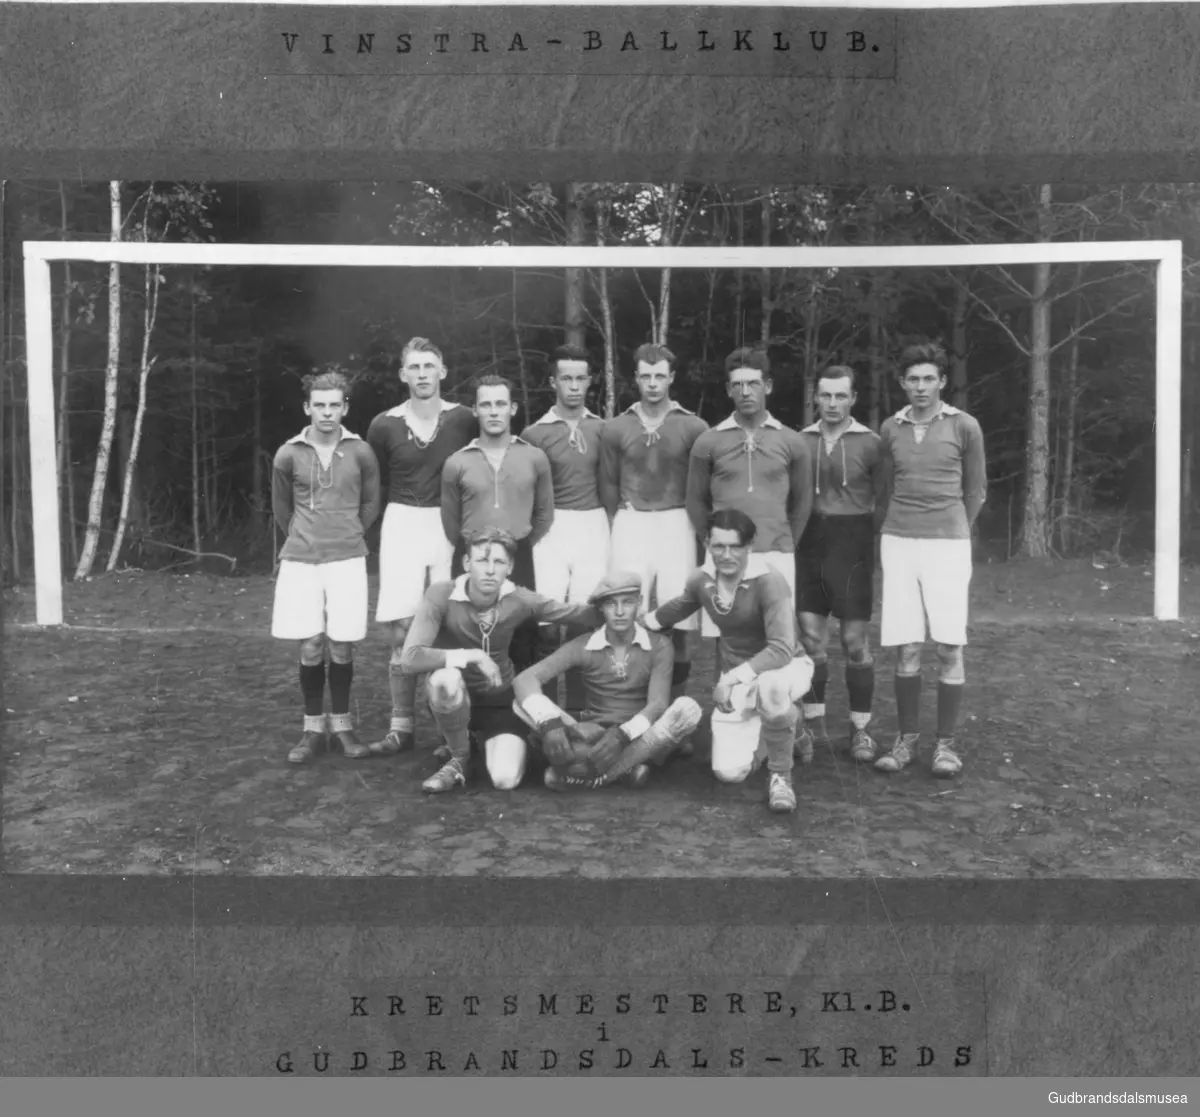 Vinstra ballklubb. 1933